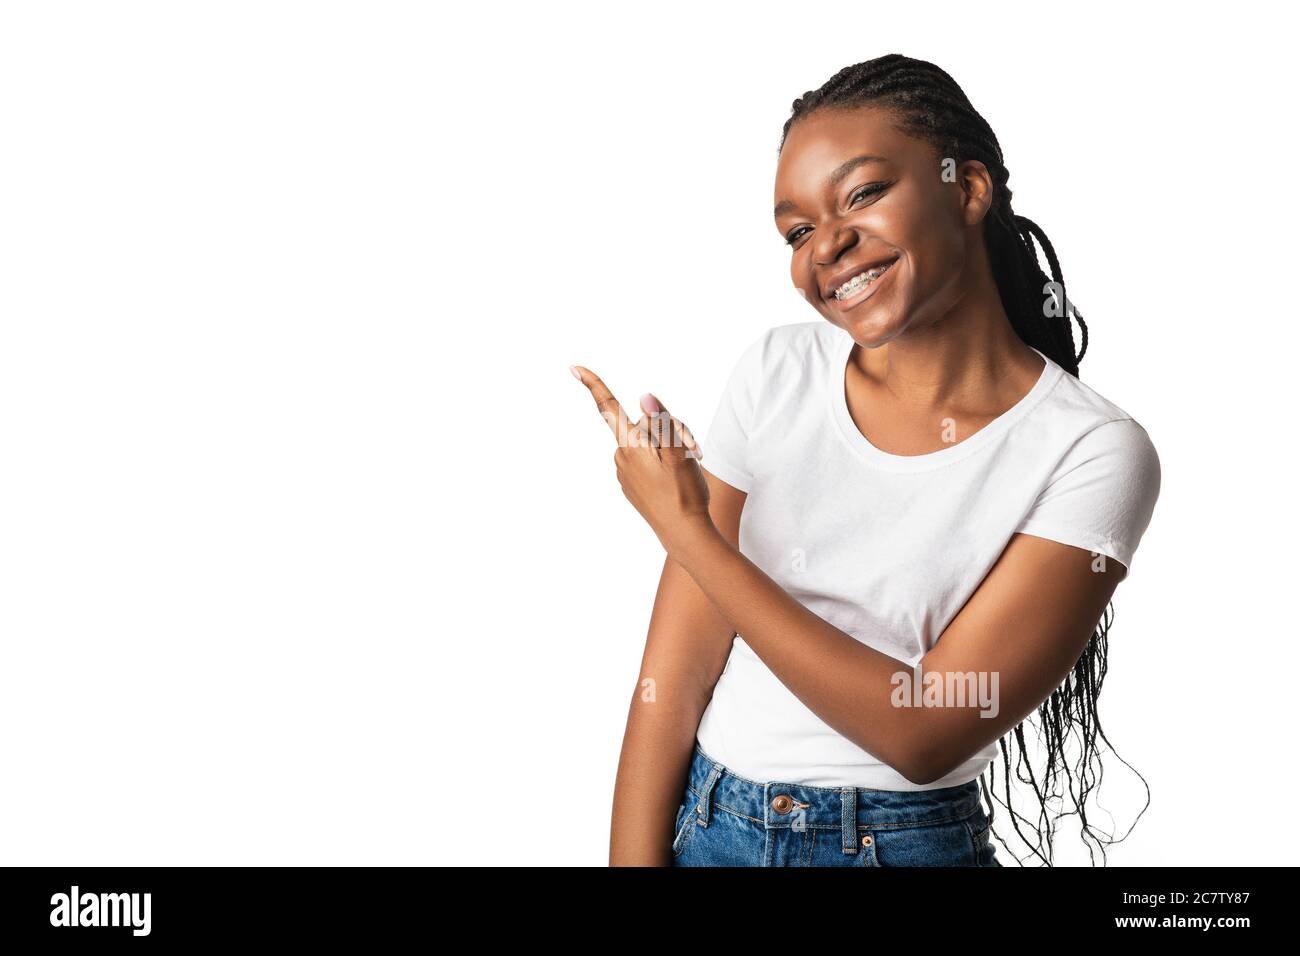 Black Girl Teens With Braces